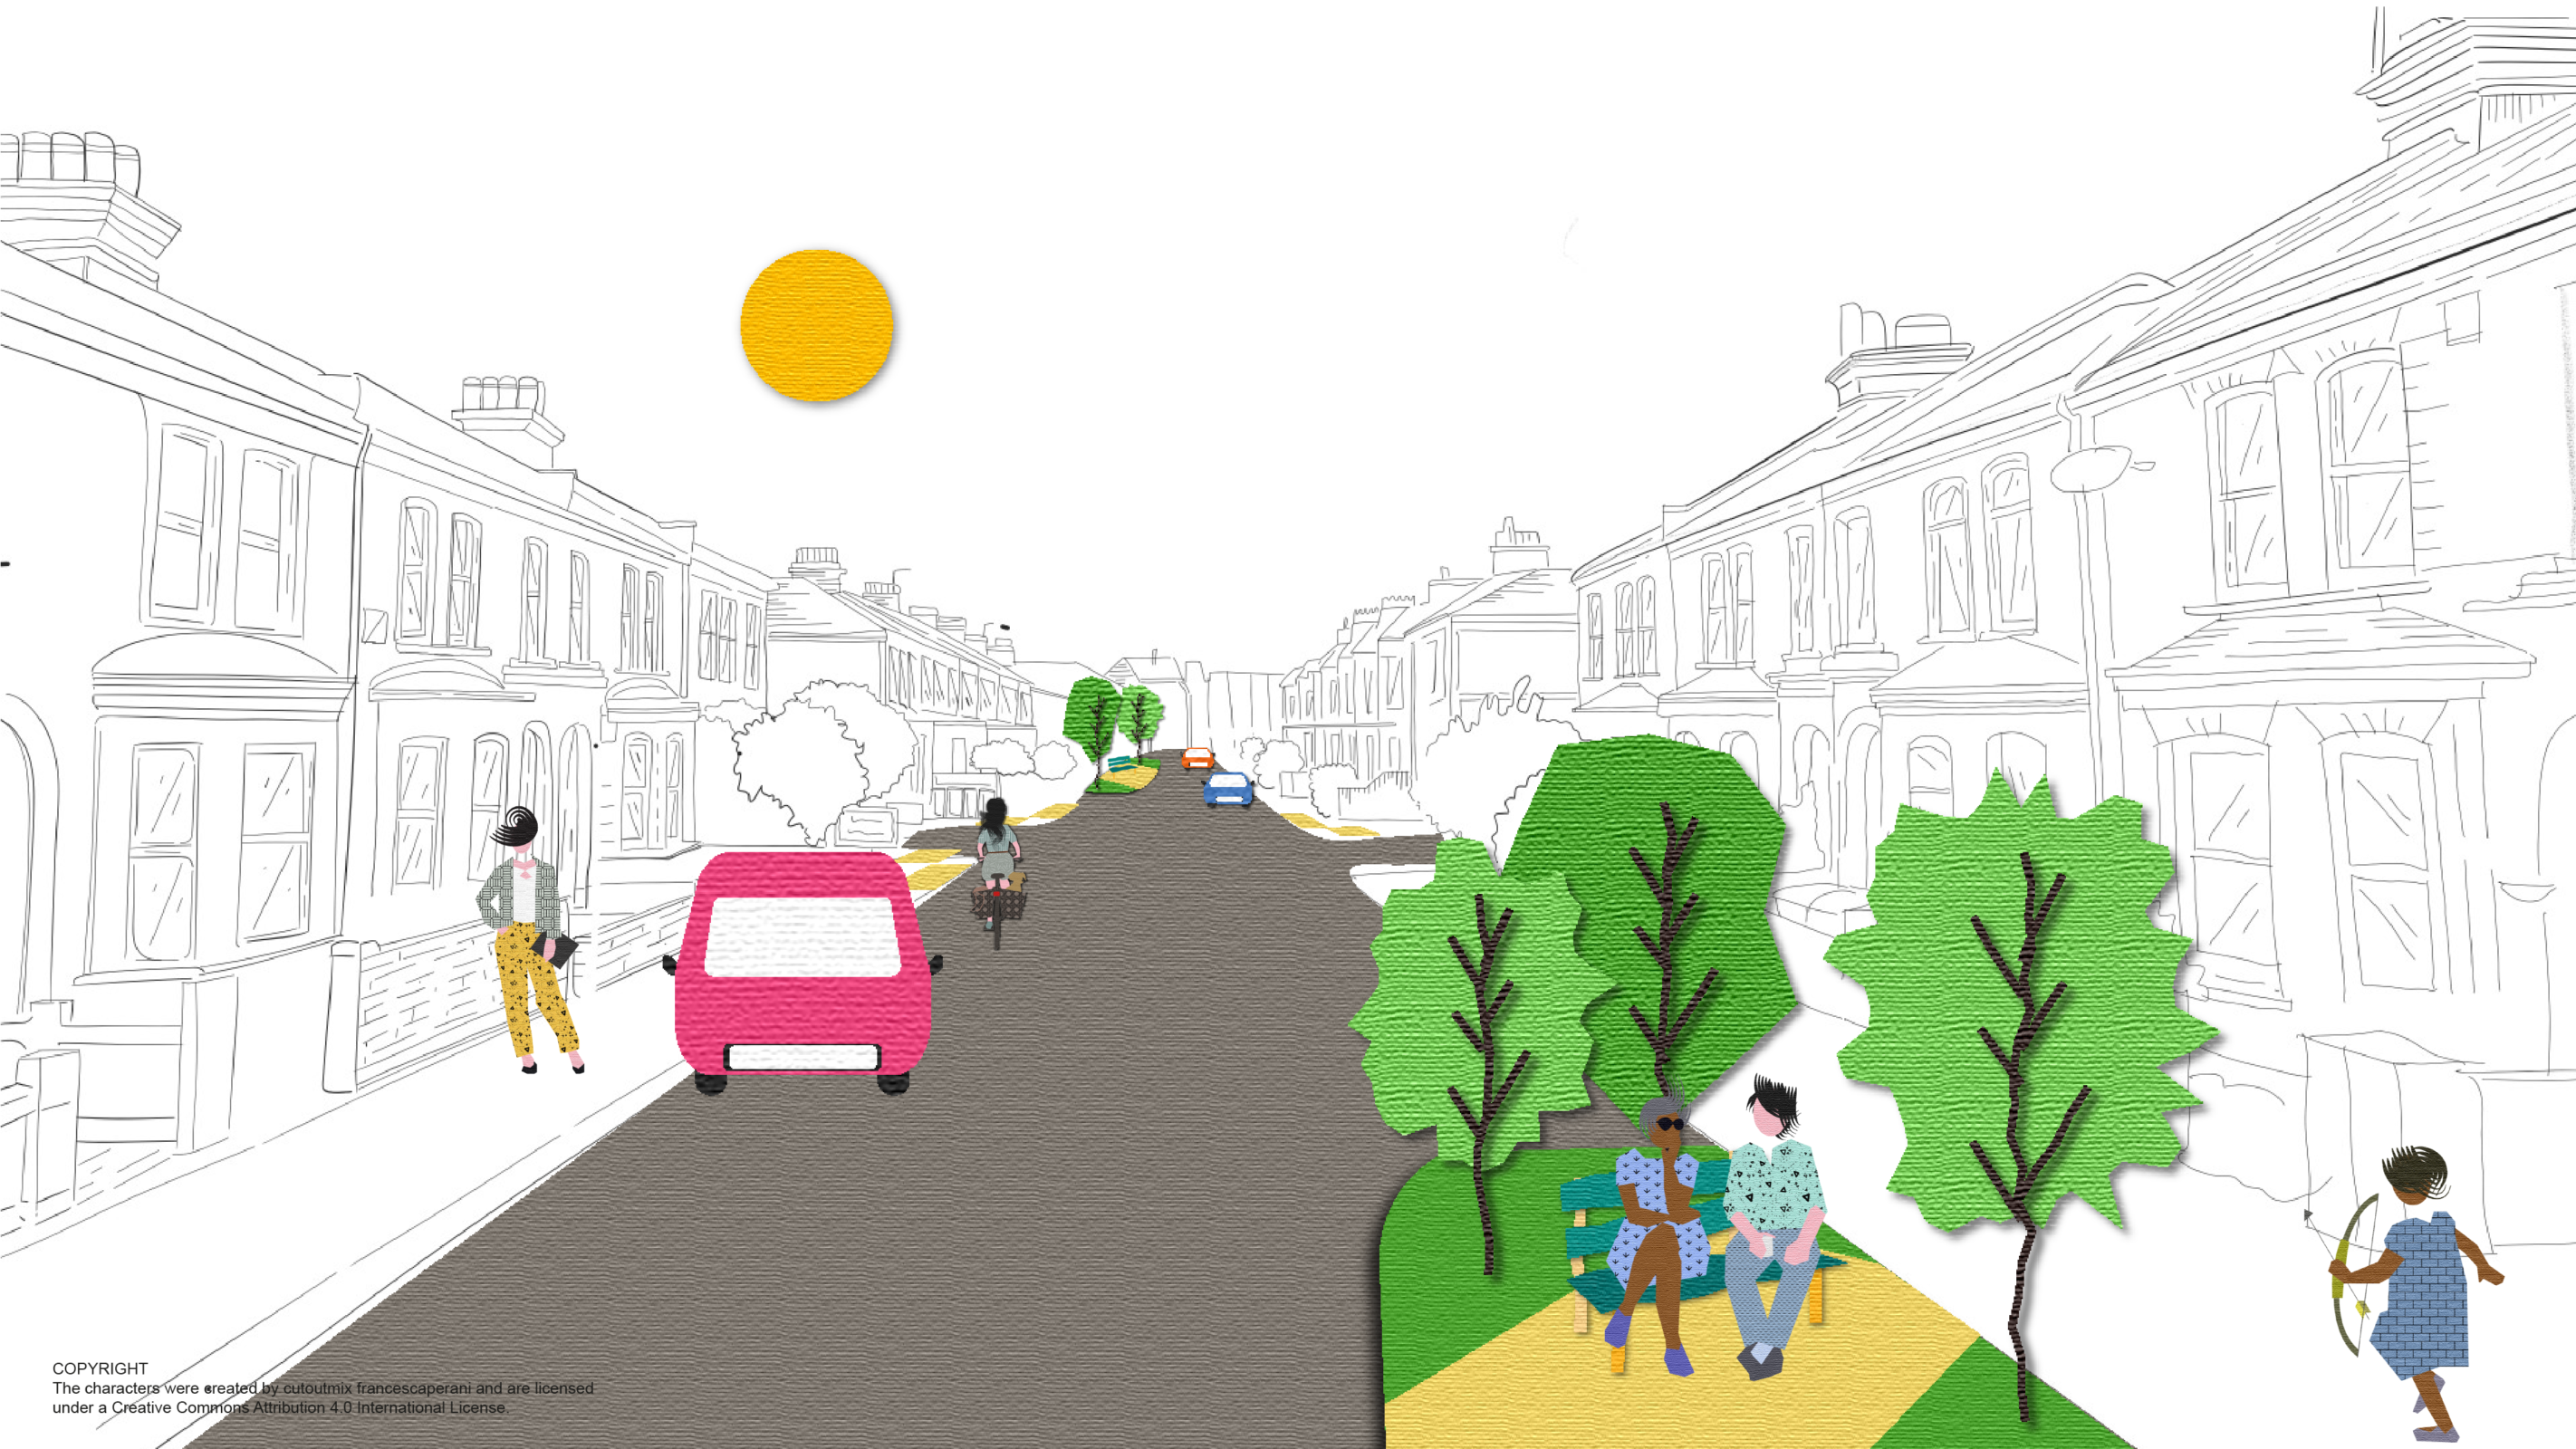 Brixton Hill Low Traffic Neighbourhood – share your views